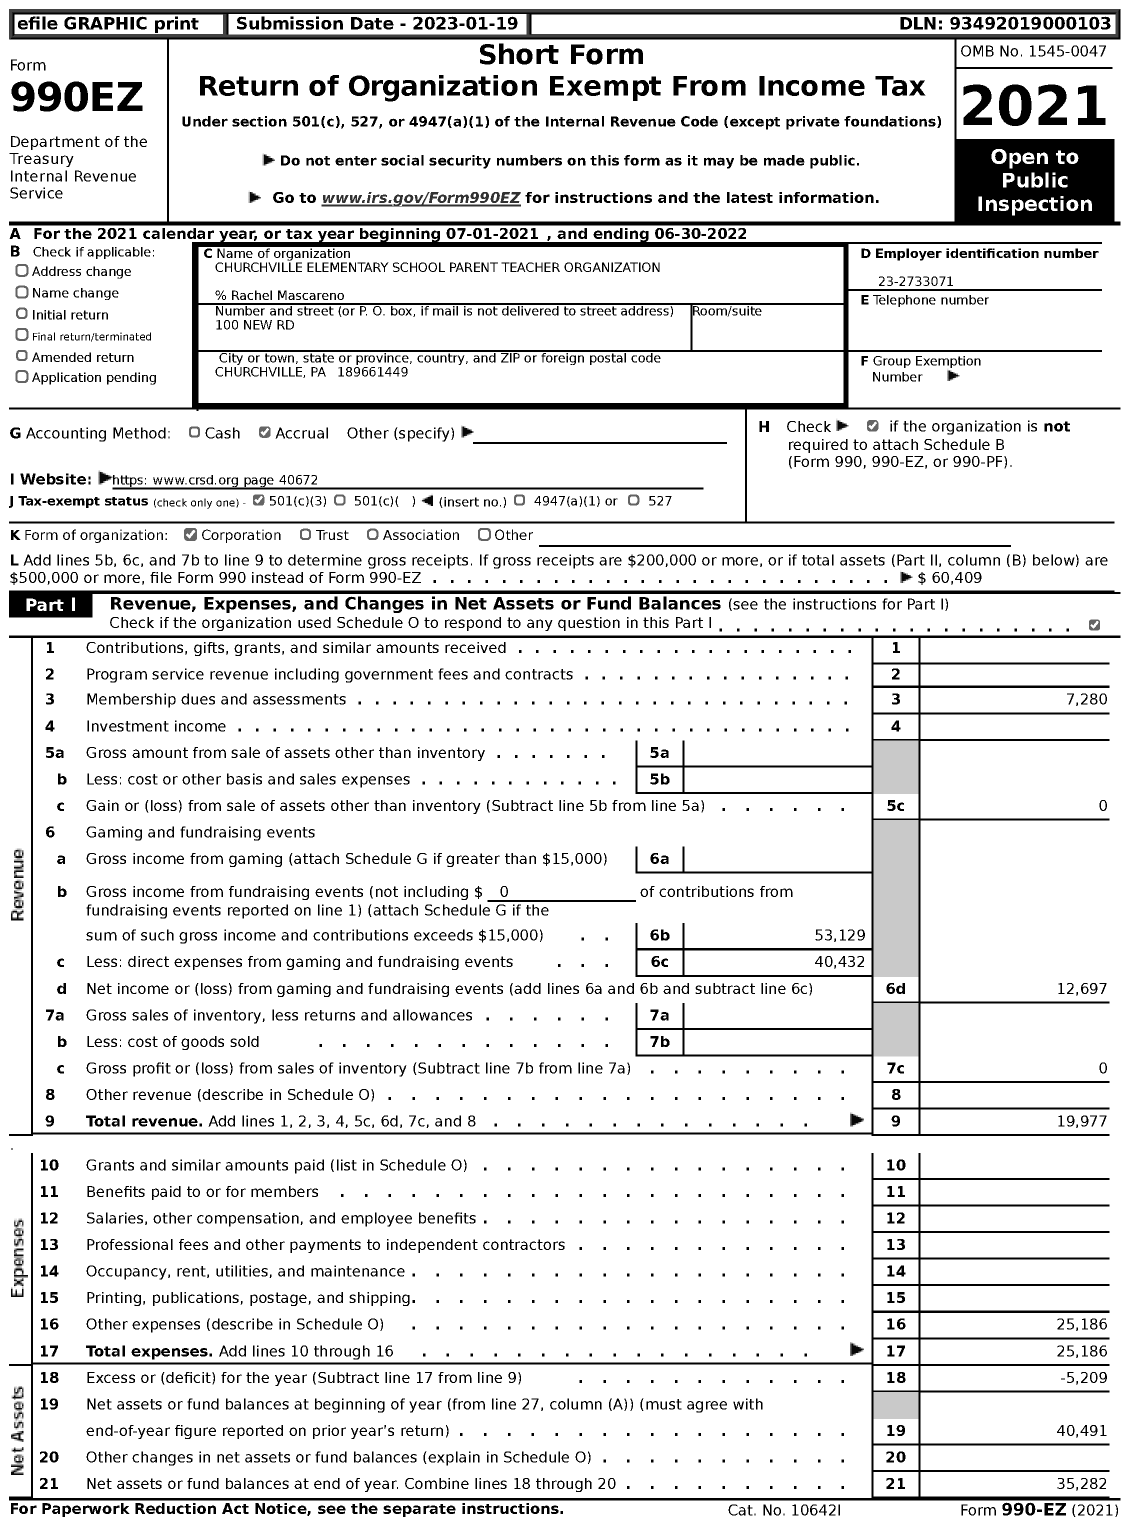 Image of first page of 2021 Form 990EZ for Churchville Elementary School Parent Teacher Organization